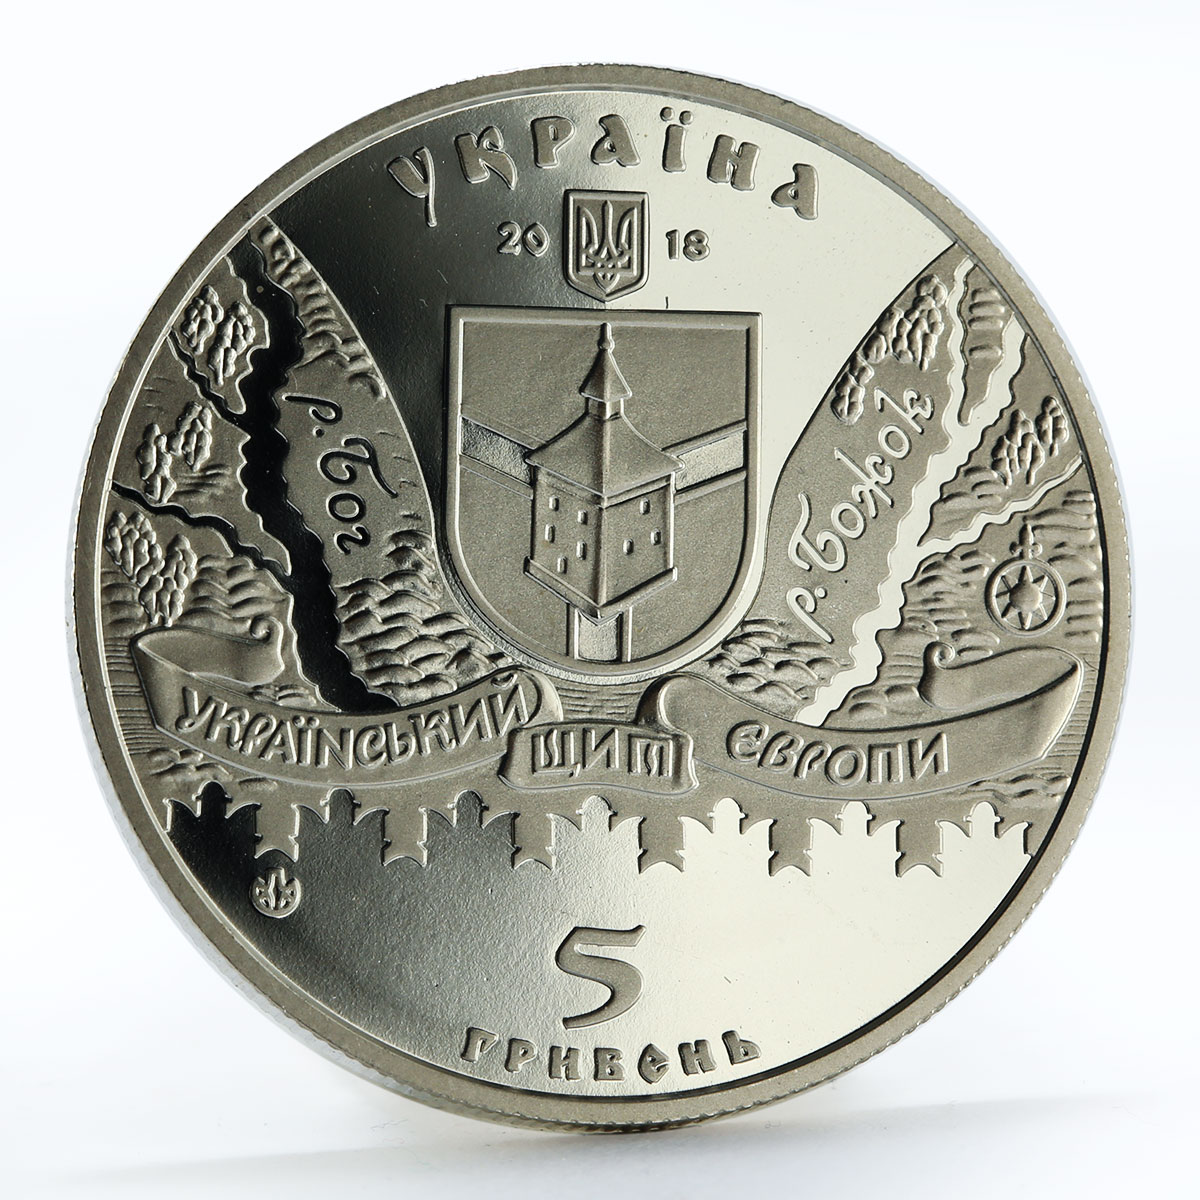 Ukraine 5 hryvnias Medzhybizh Fortress castle church nickel coin 2018